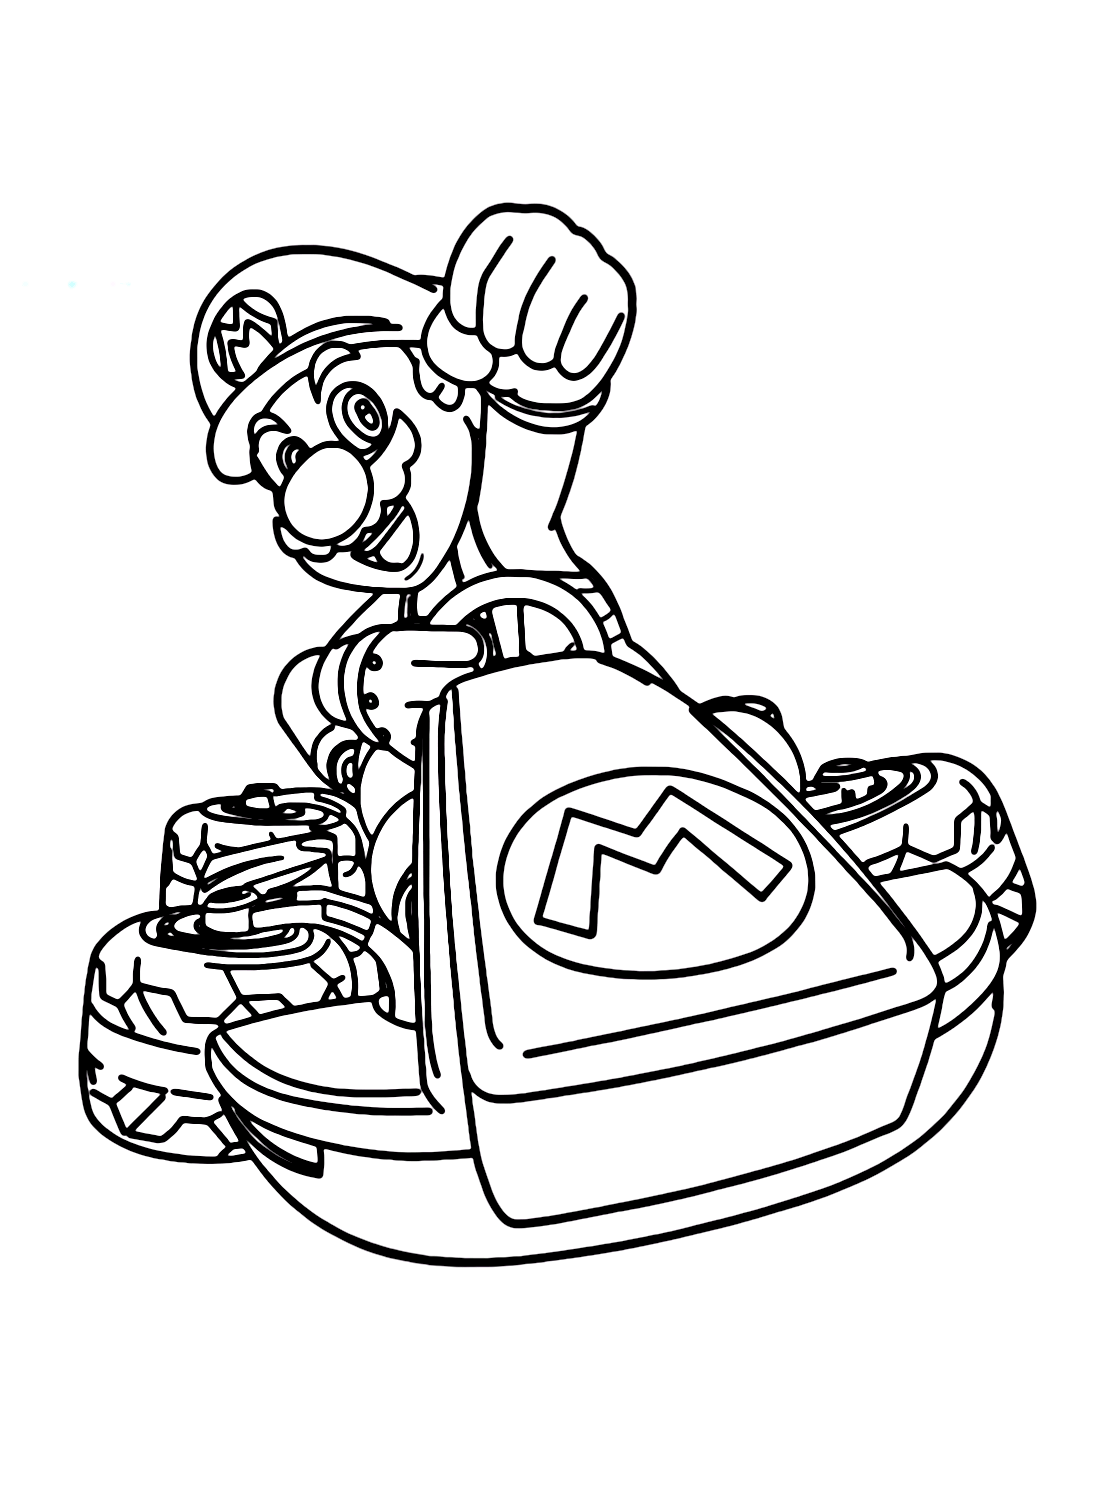 Mario de Mario Kart 8 Deluxe de Mario Kart